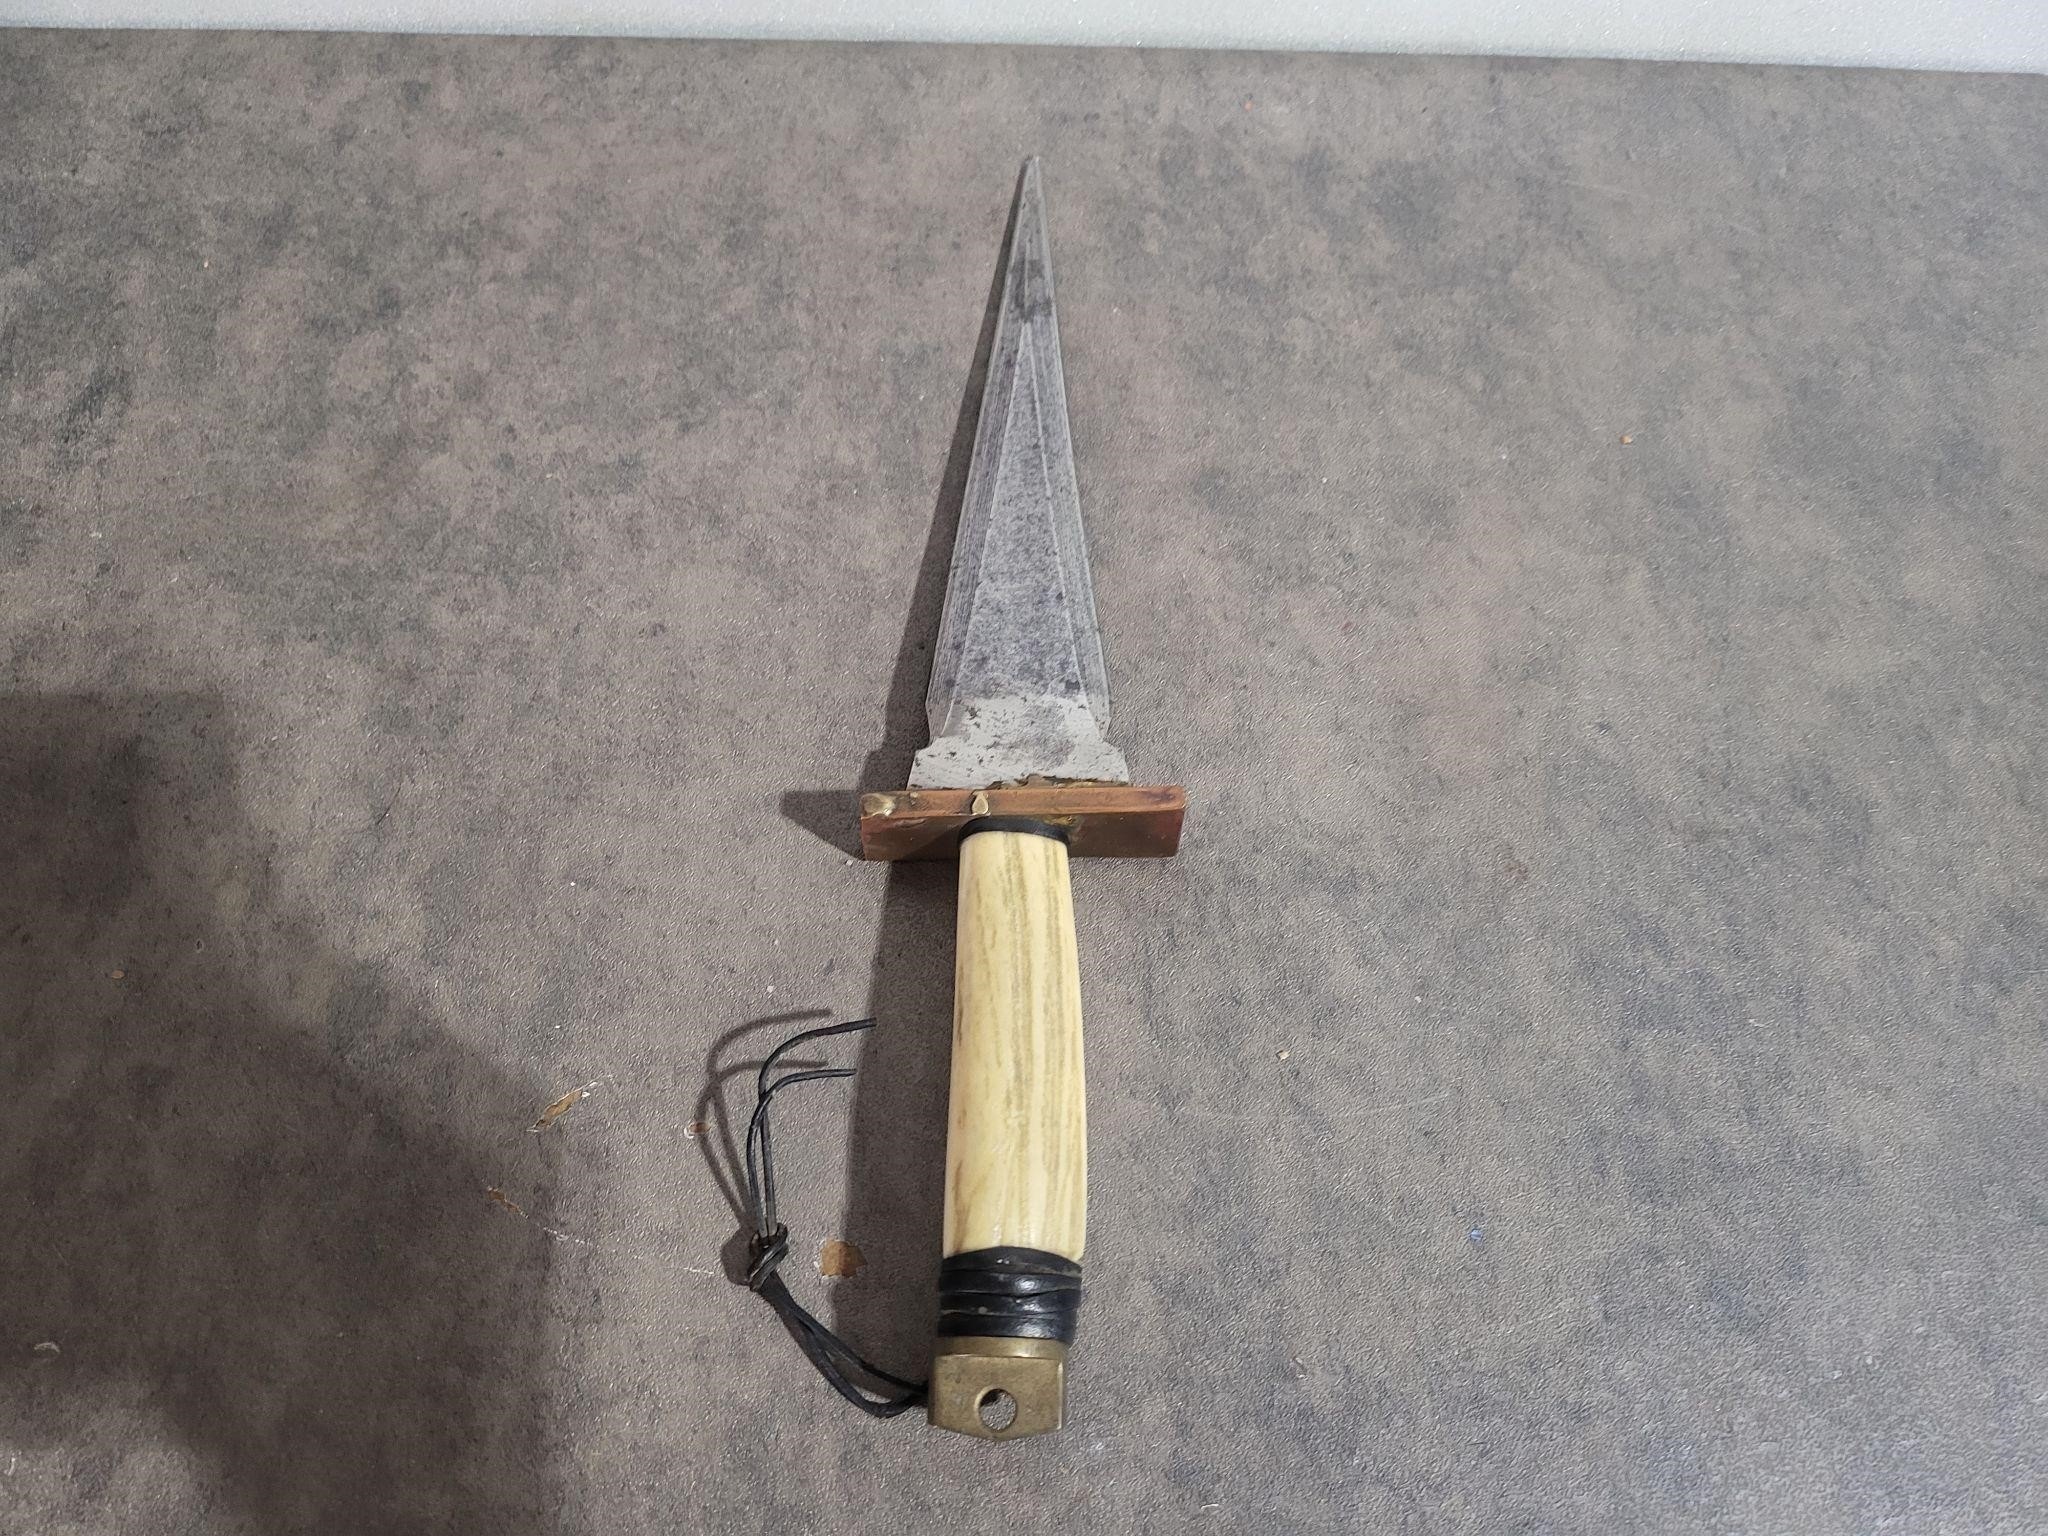 Old Handmade Bone Dagger